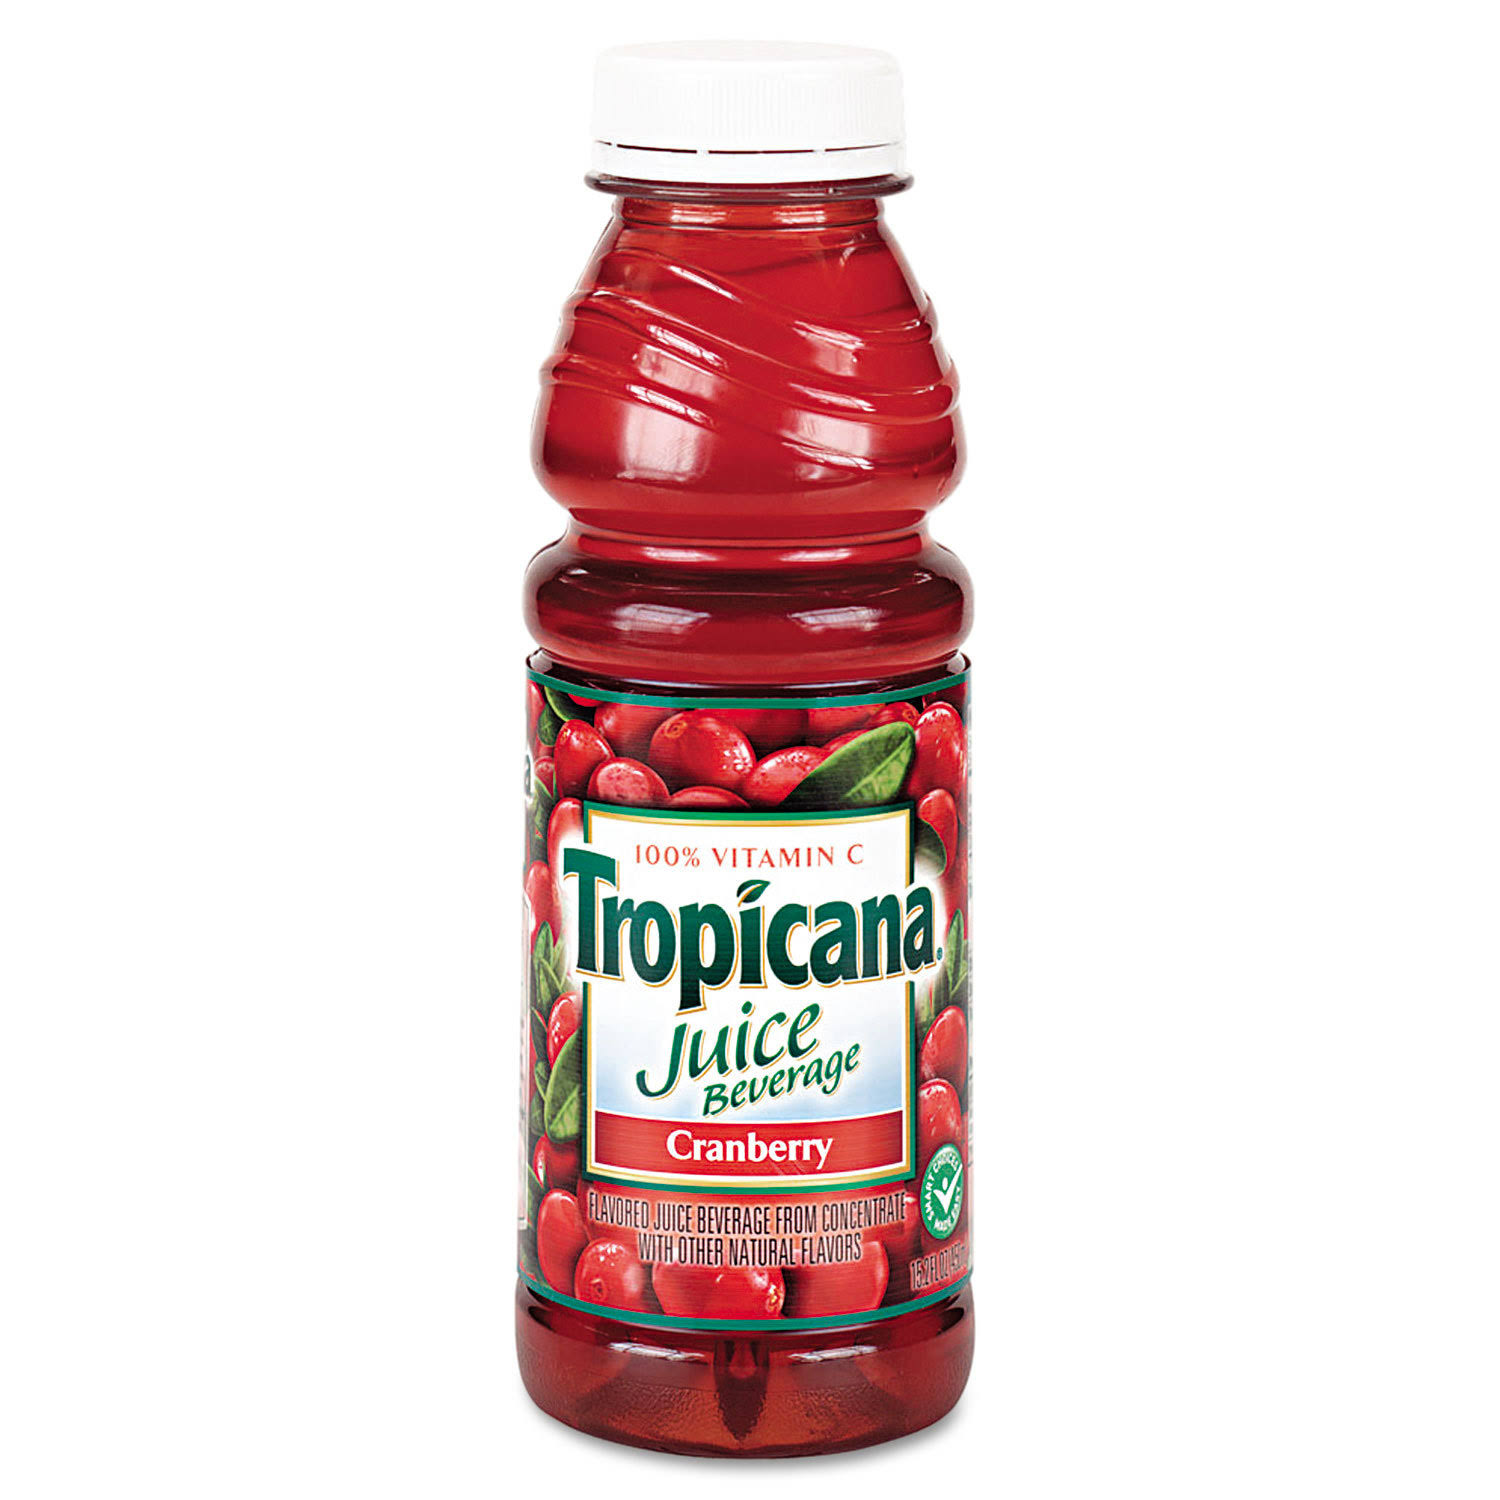 Tropicana Juice Beverage - Cranberry, 15.2 oz